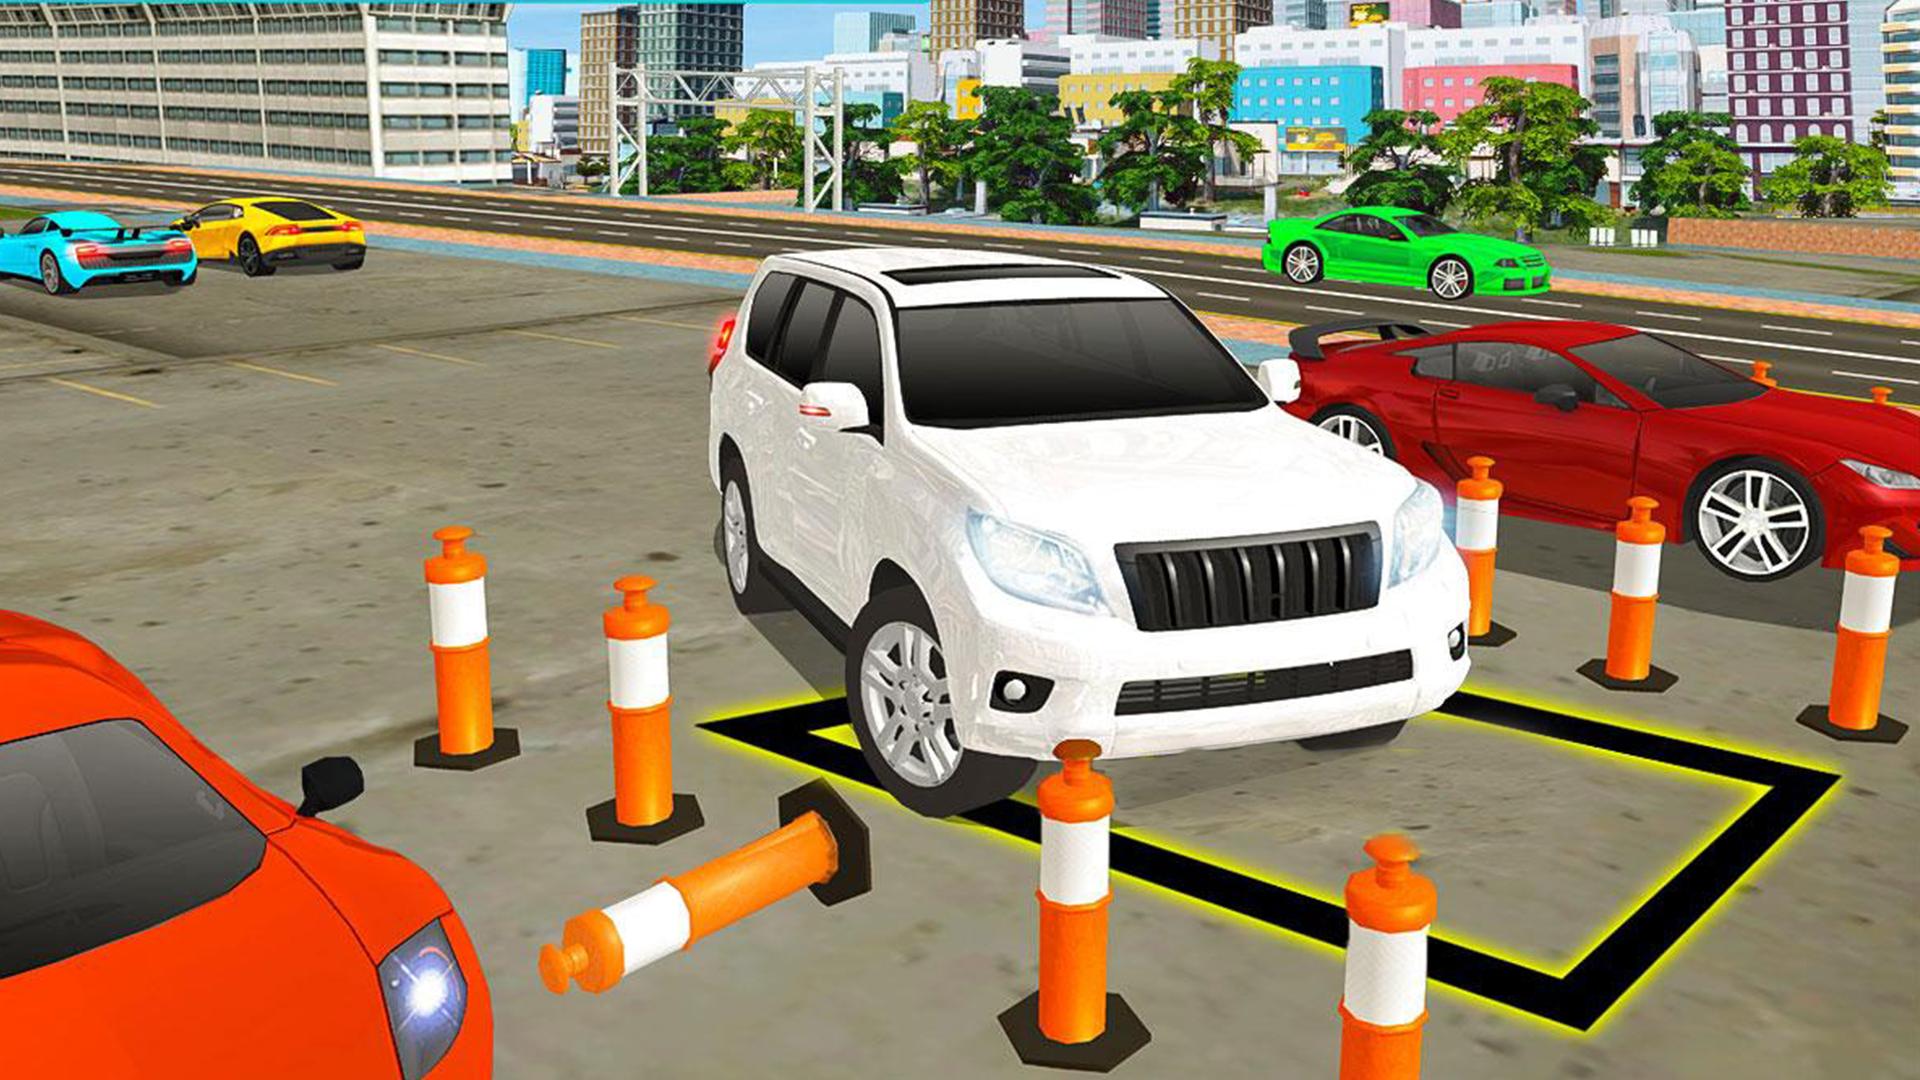 Prado Car Driving games 2020 - Free Car Games 1.0.3 Screenshot 10